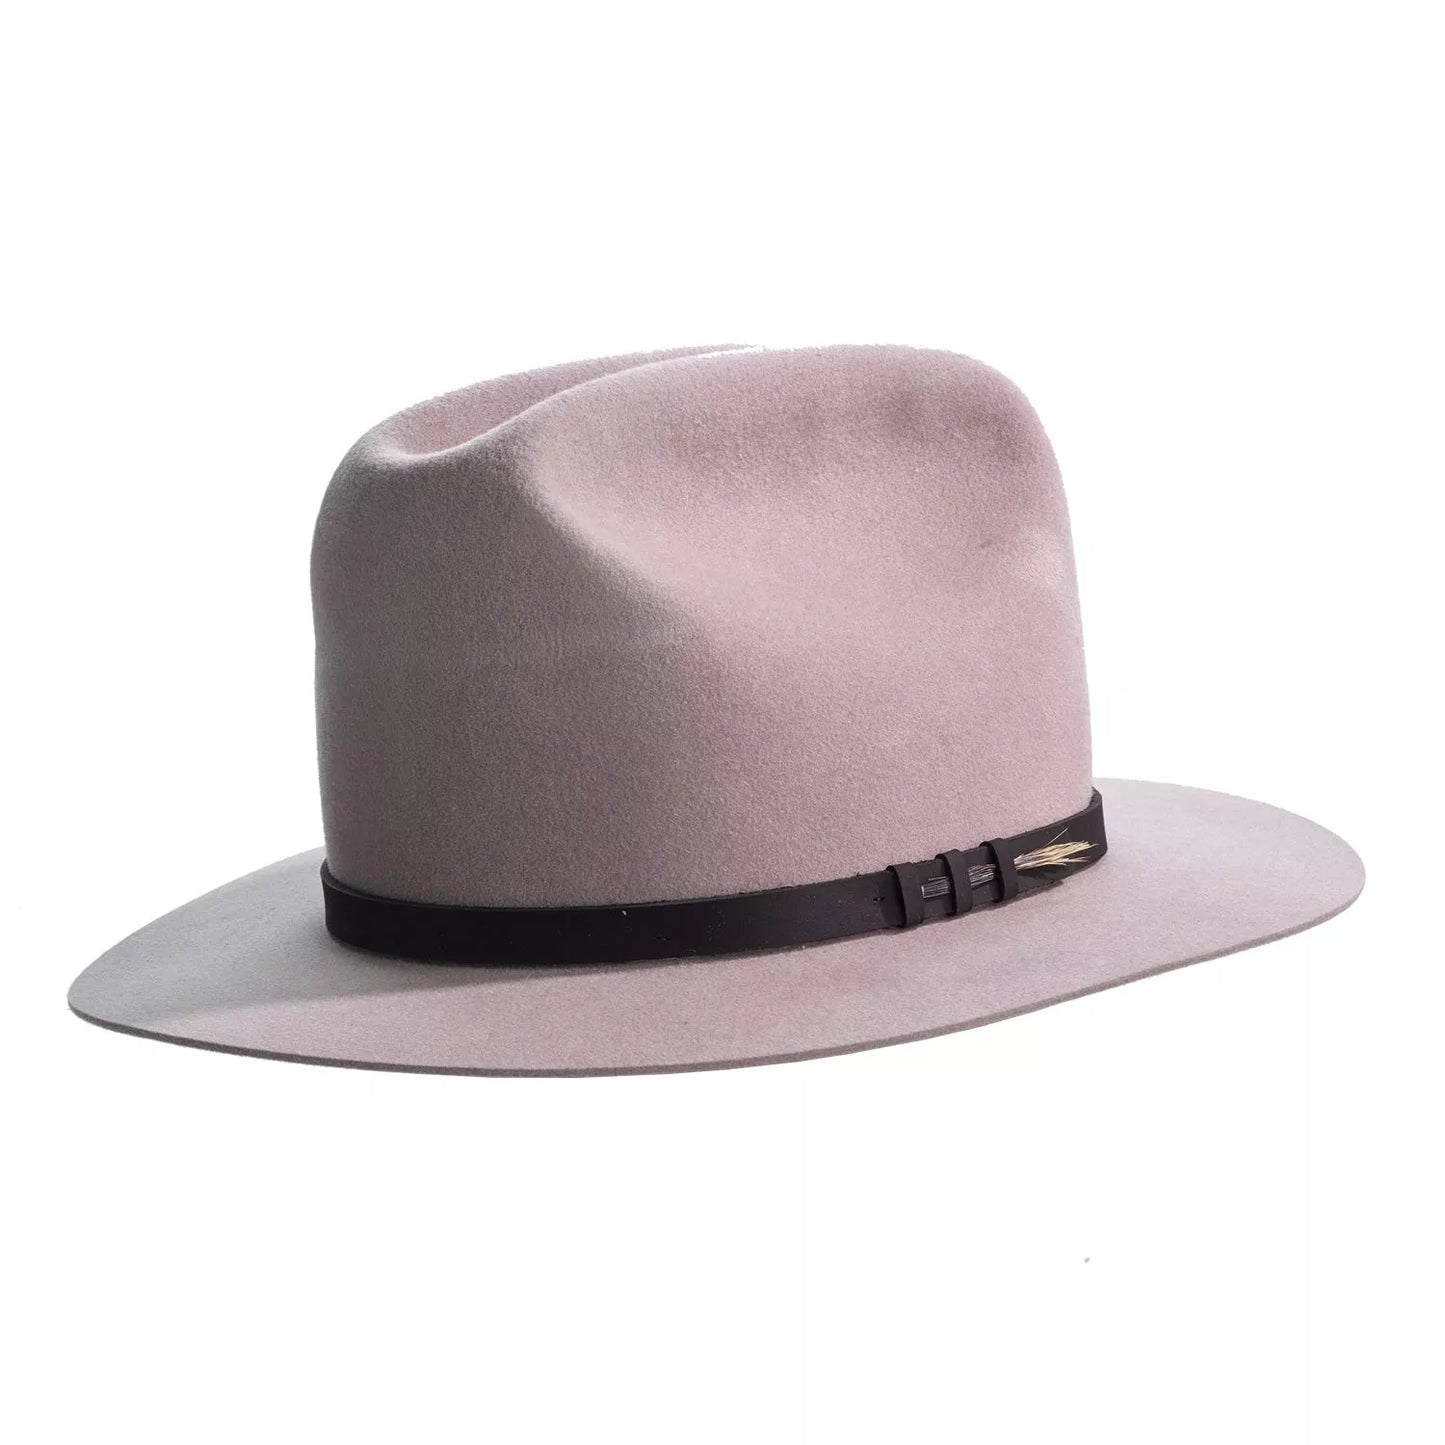 The Cattleman Hat